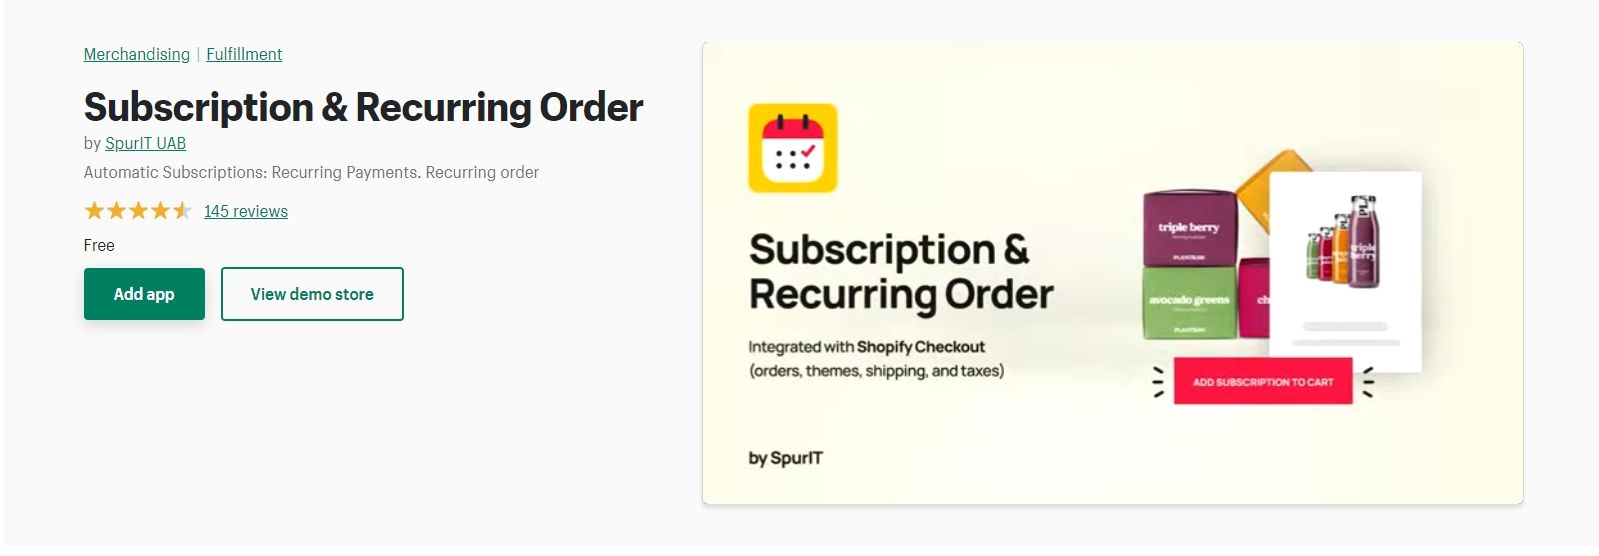 shopify-subscription-app-5